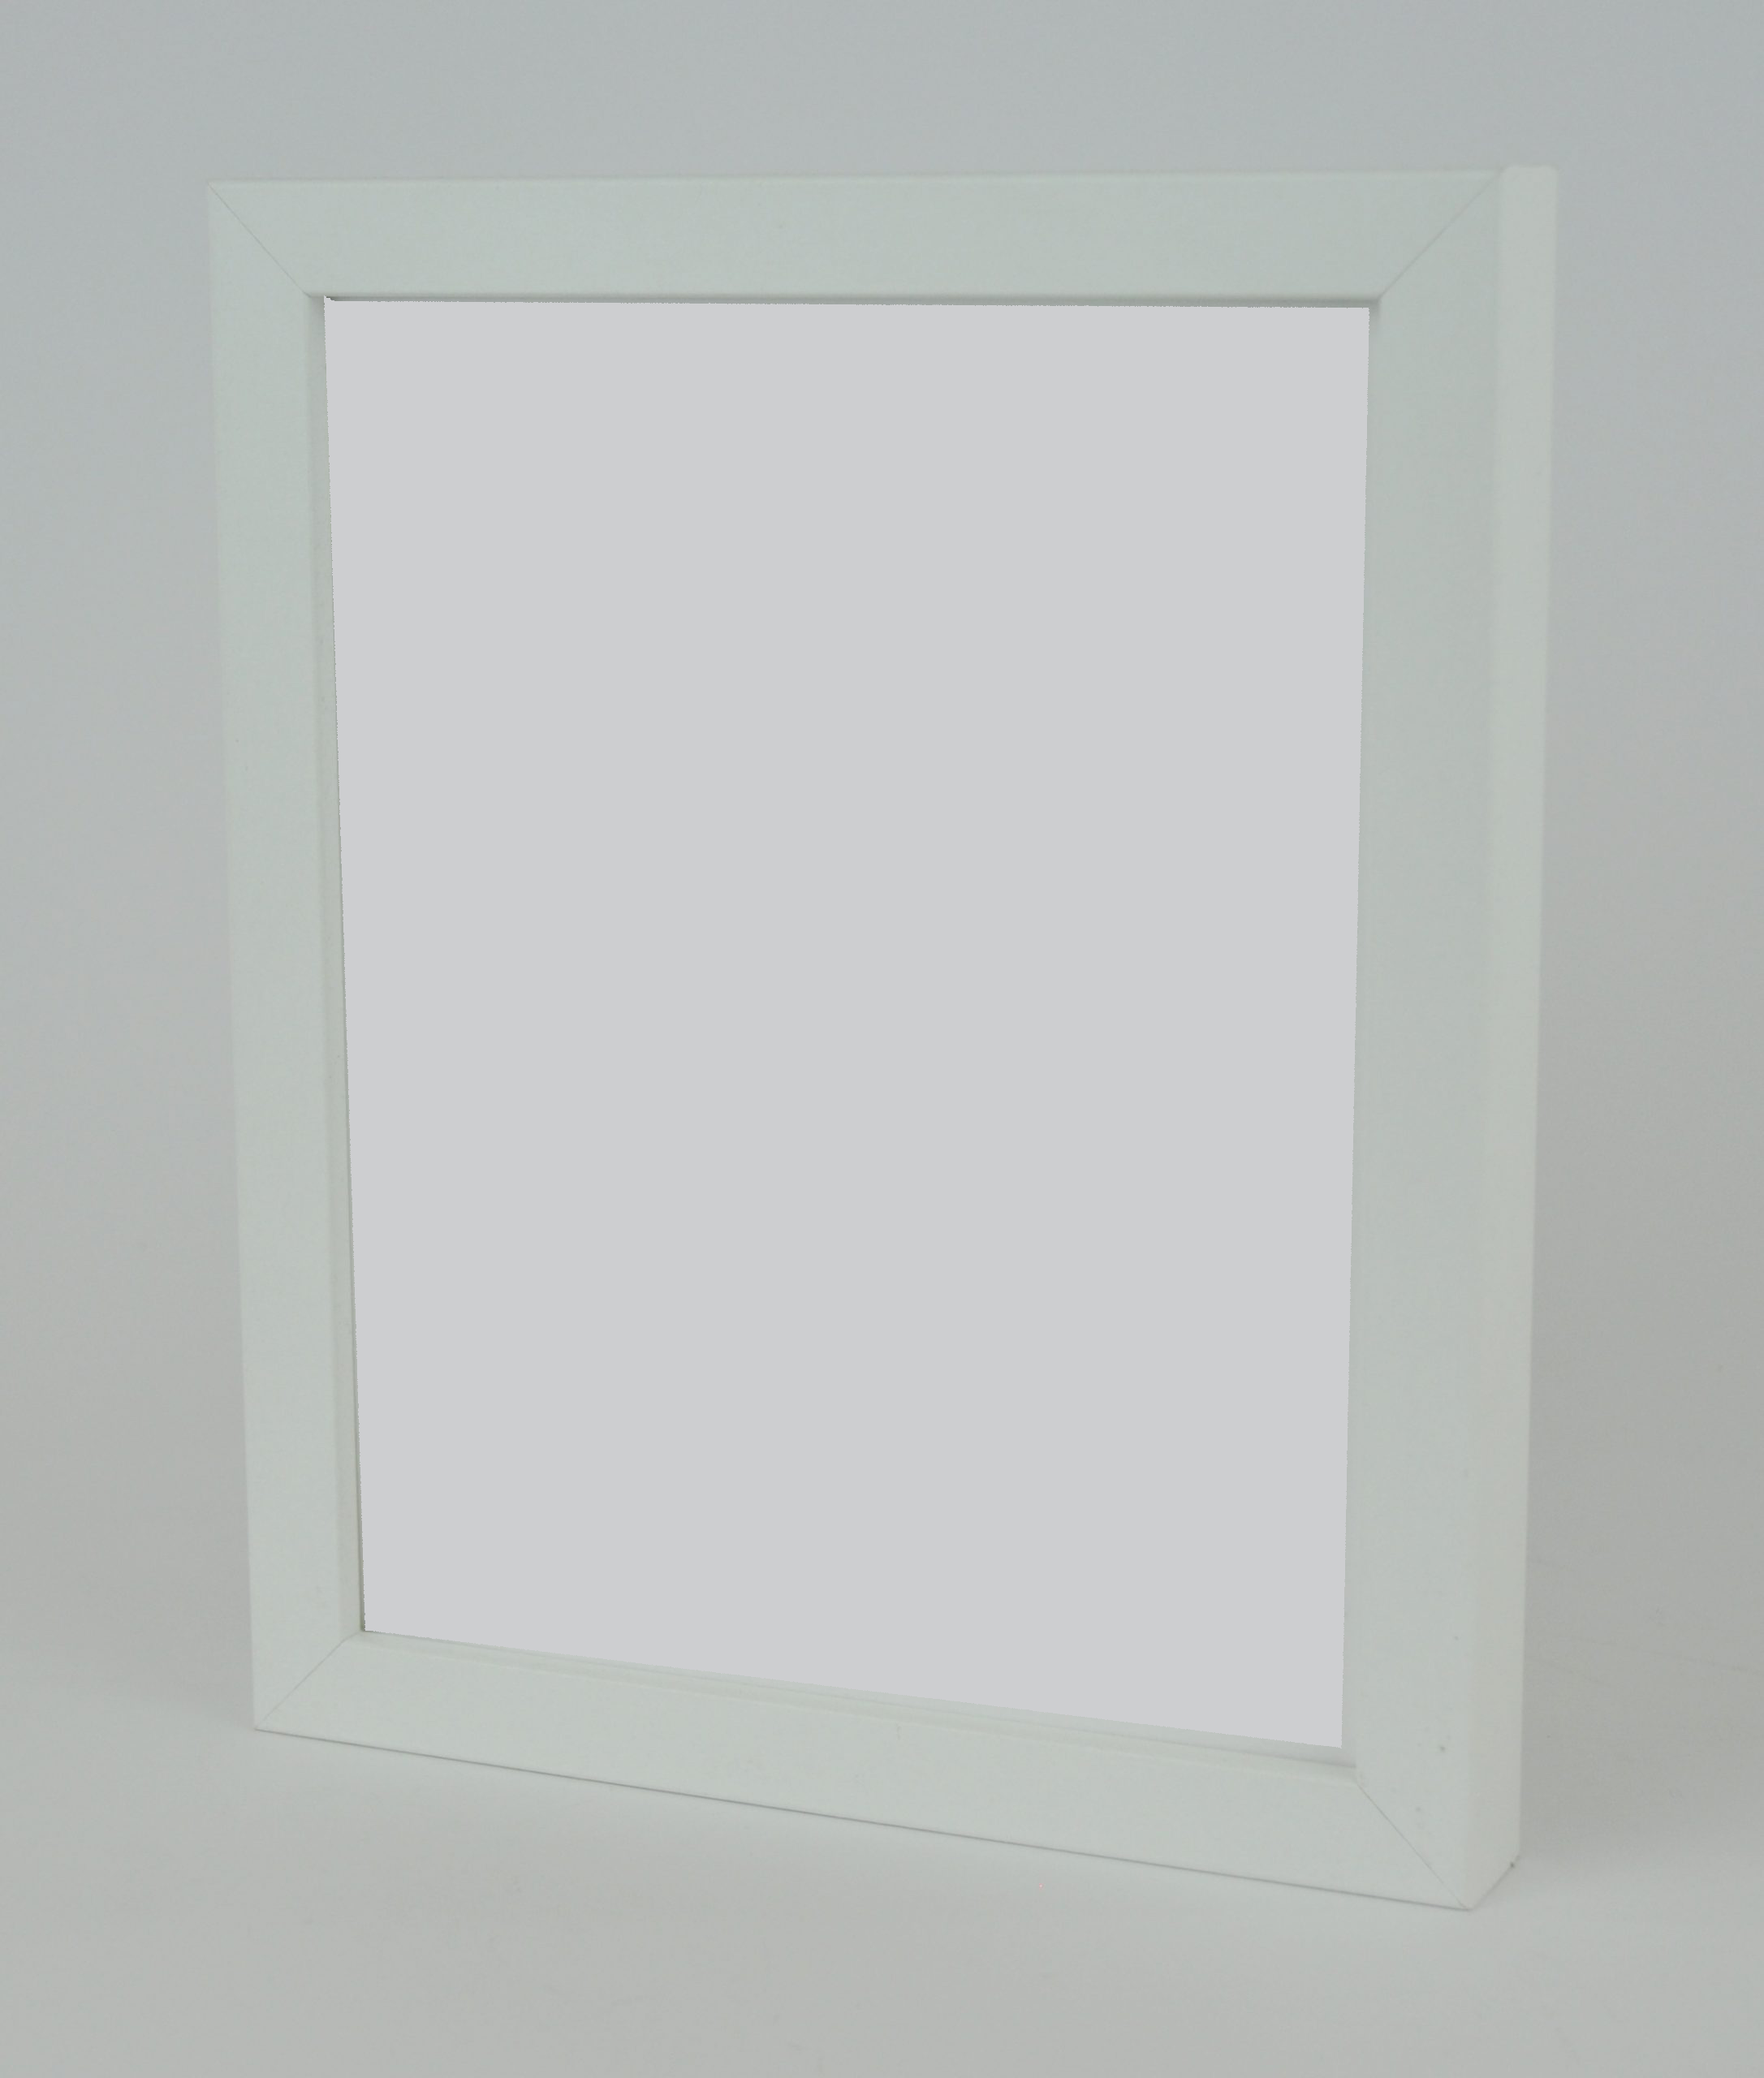 A4 White Box Frame